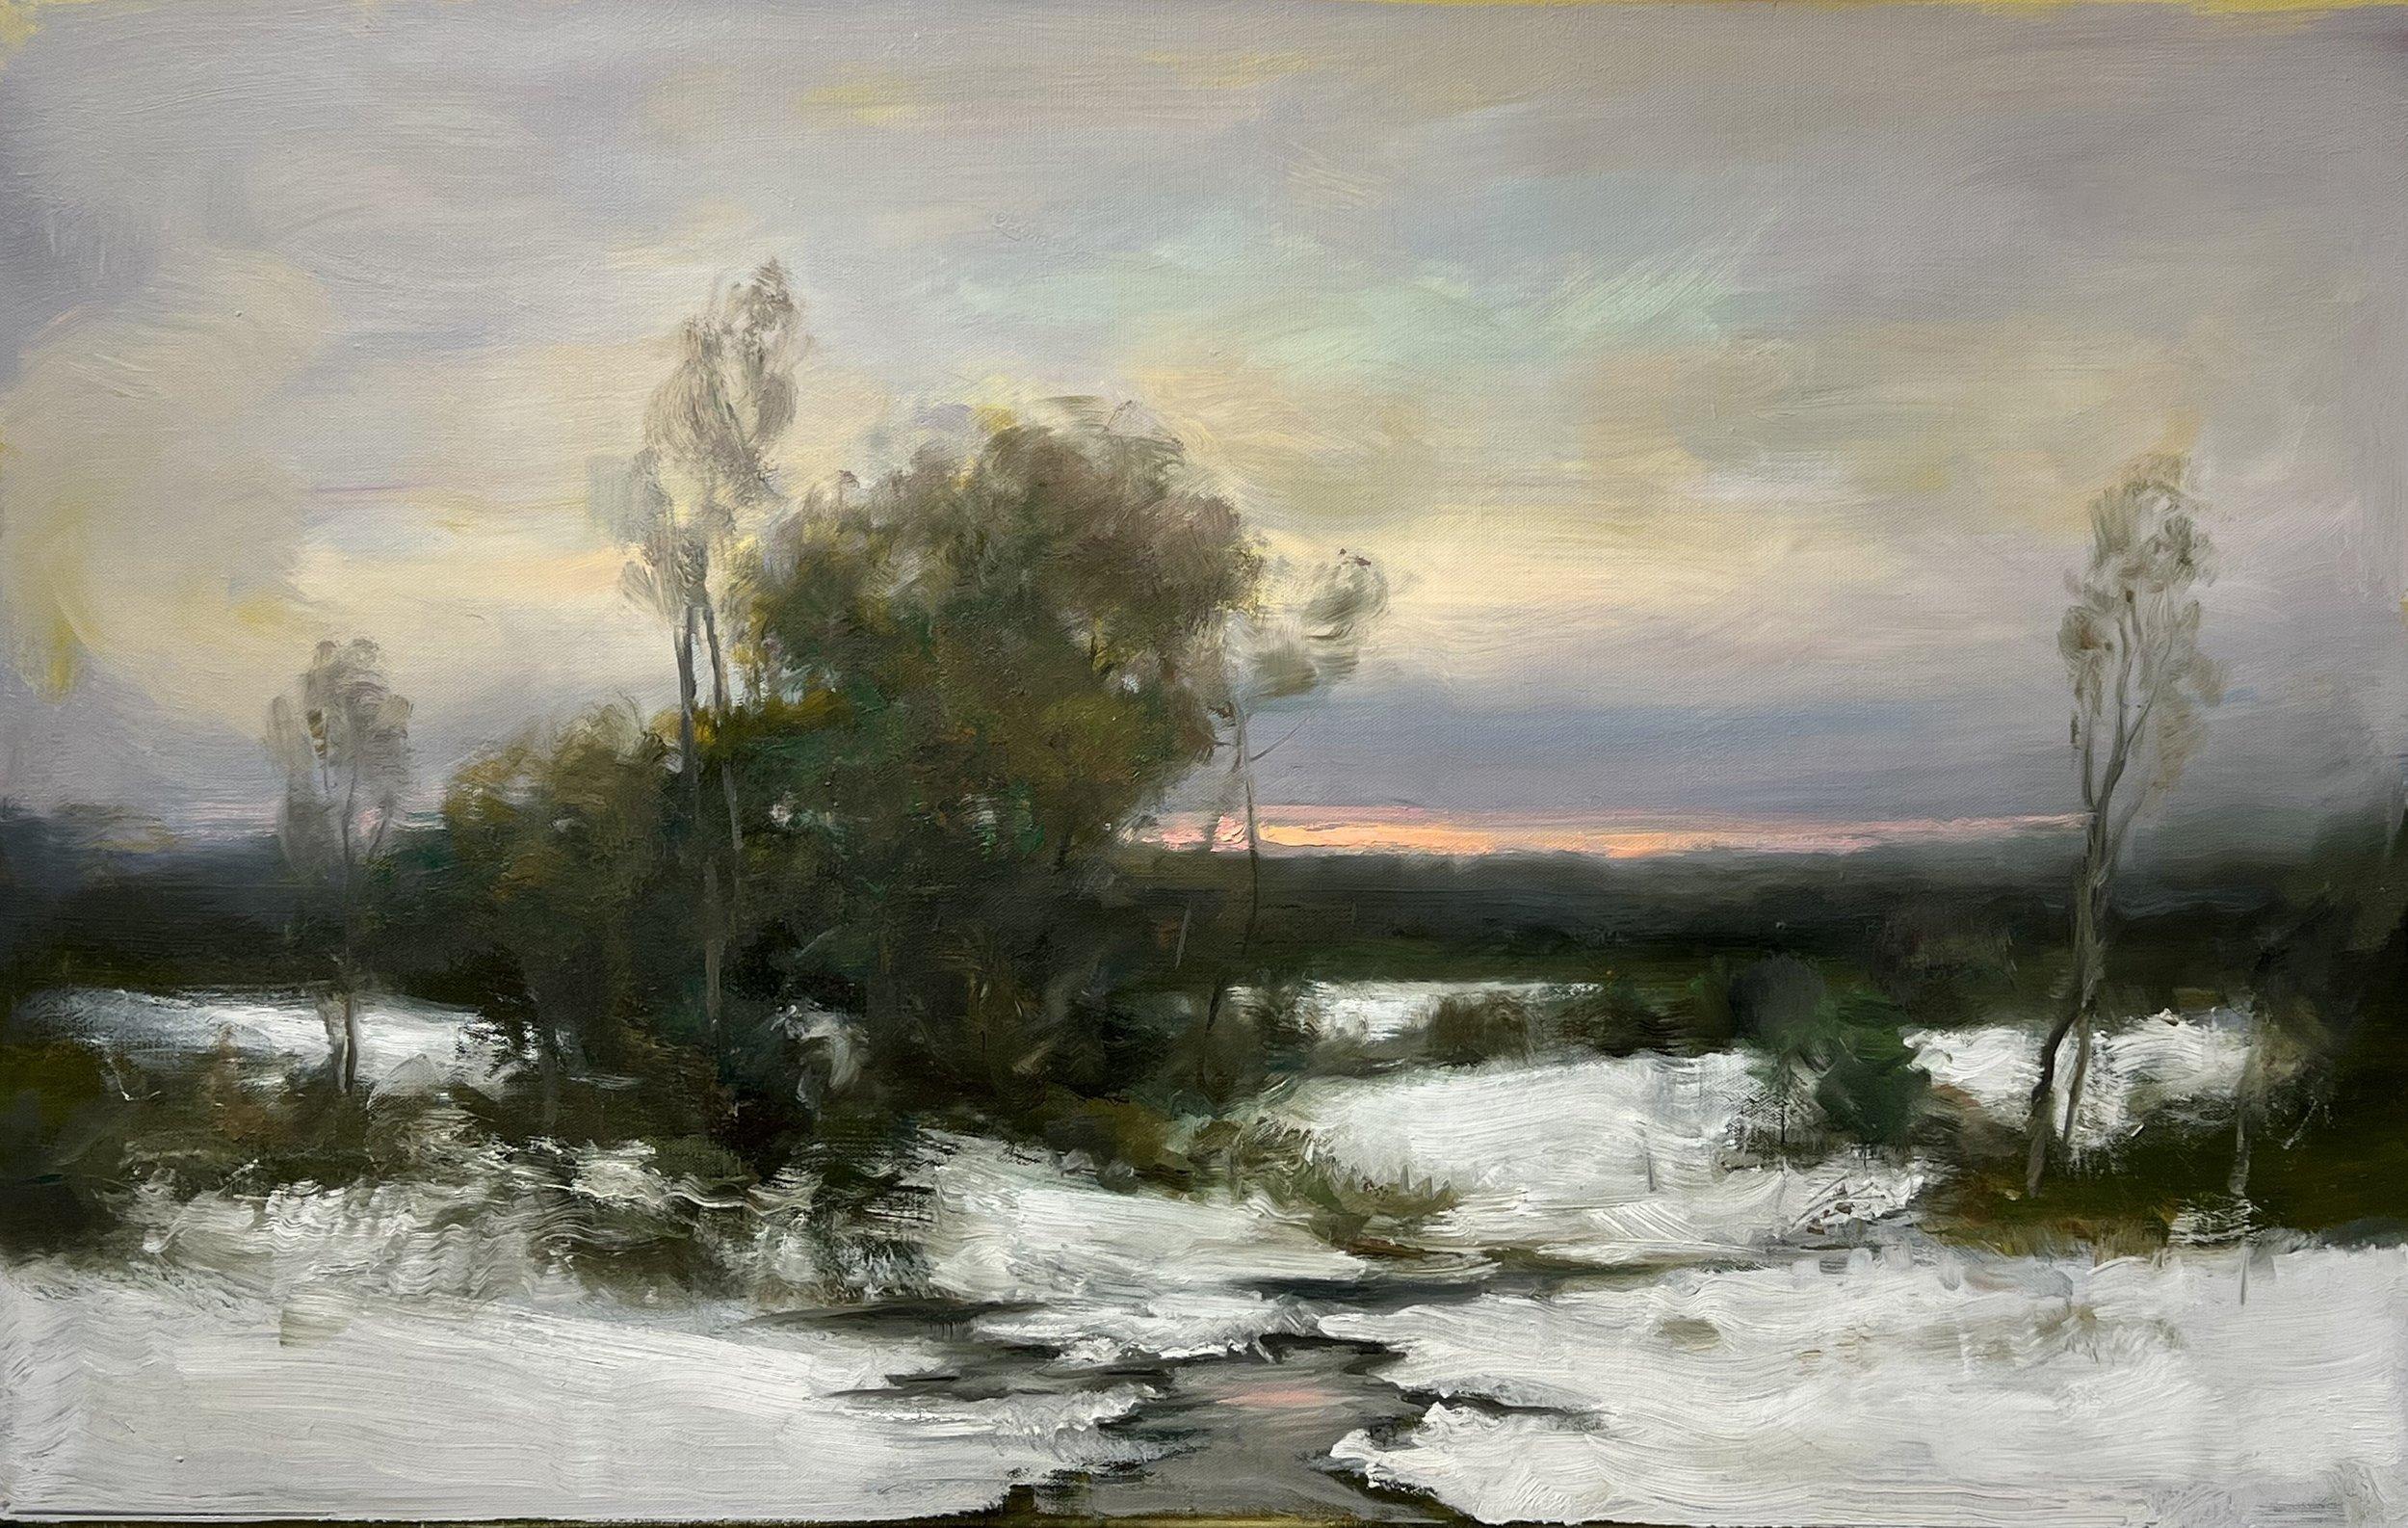 Dennis Sheehan, "Winter Skies" Snowy  Tonalist Landscape Oil Painting on Canvas